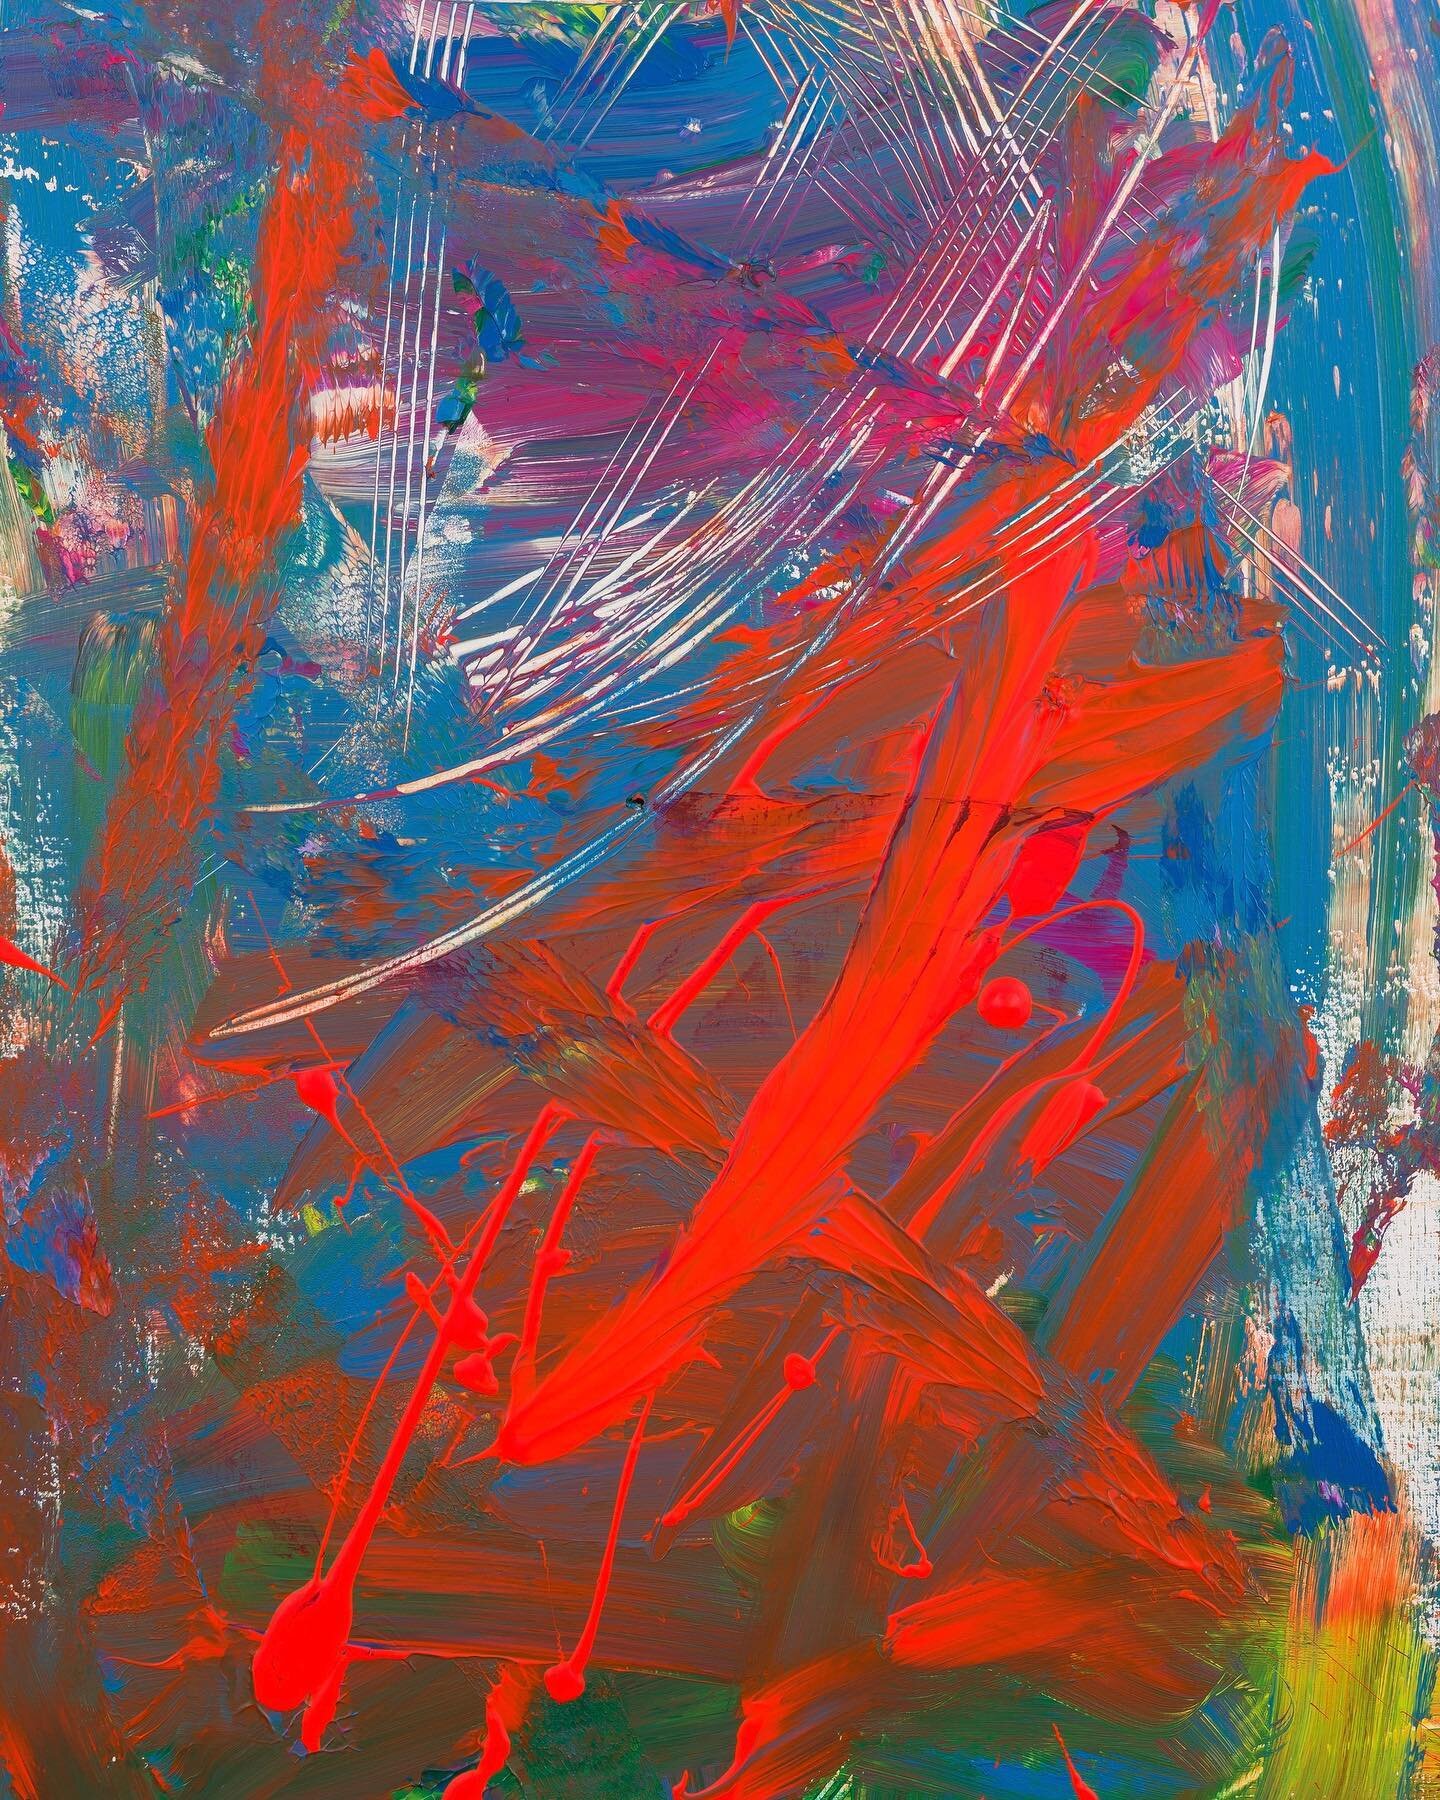 C&eacute;cile Lobert
Untitled, 2022
Acrylic on canvas 
39 3/8 x 27 1/2 inch

UNSPOKEN @shrine.nyc

#shrinenyc #shrinegallery #nycart #artnyc #artnewyork #newyorkartgallery #newyorkartgalleries #artshow #artistsofinstagram #abstractexpressionism #cont